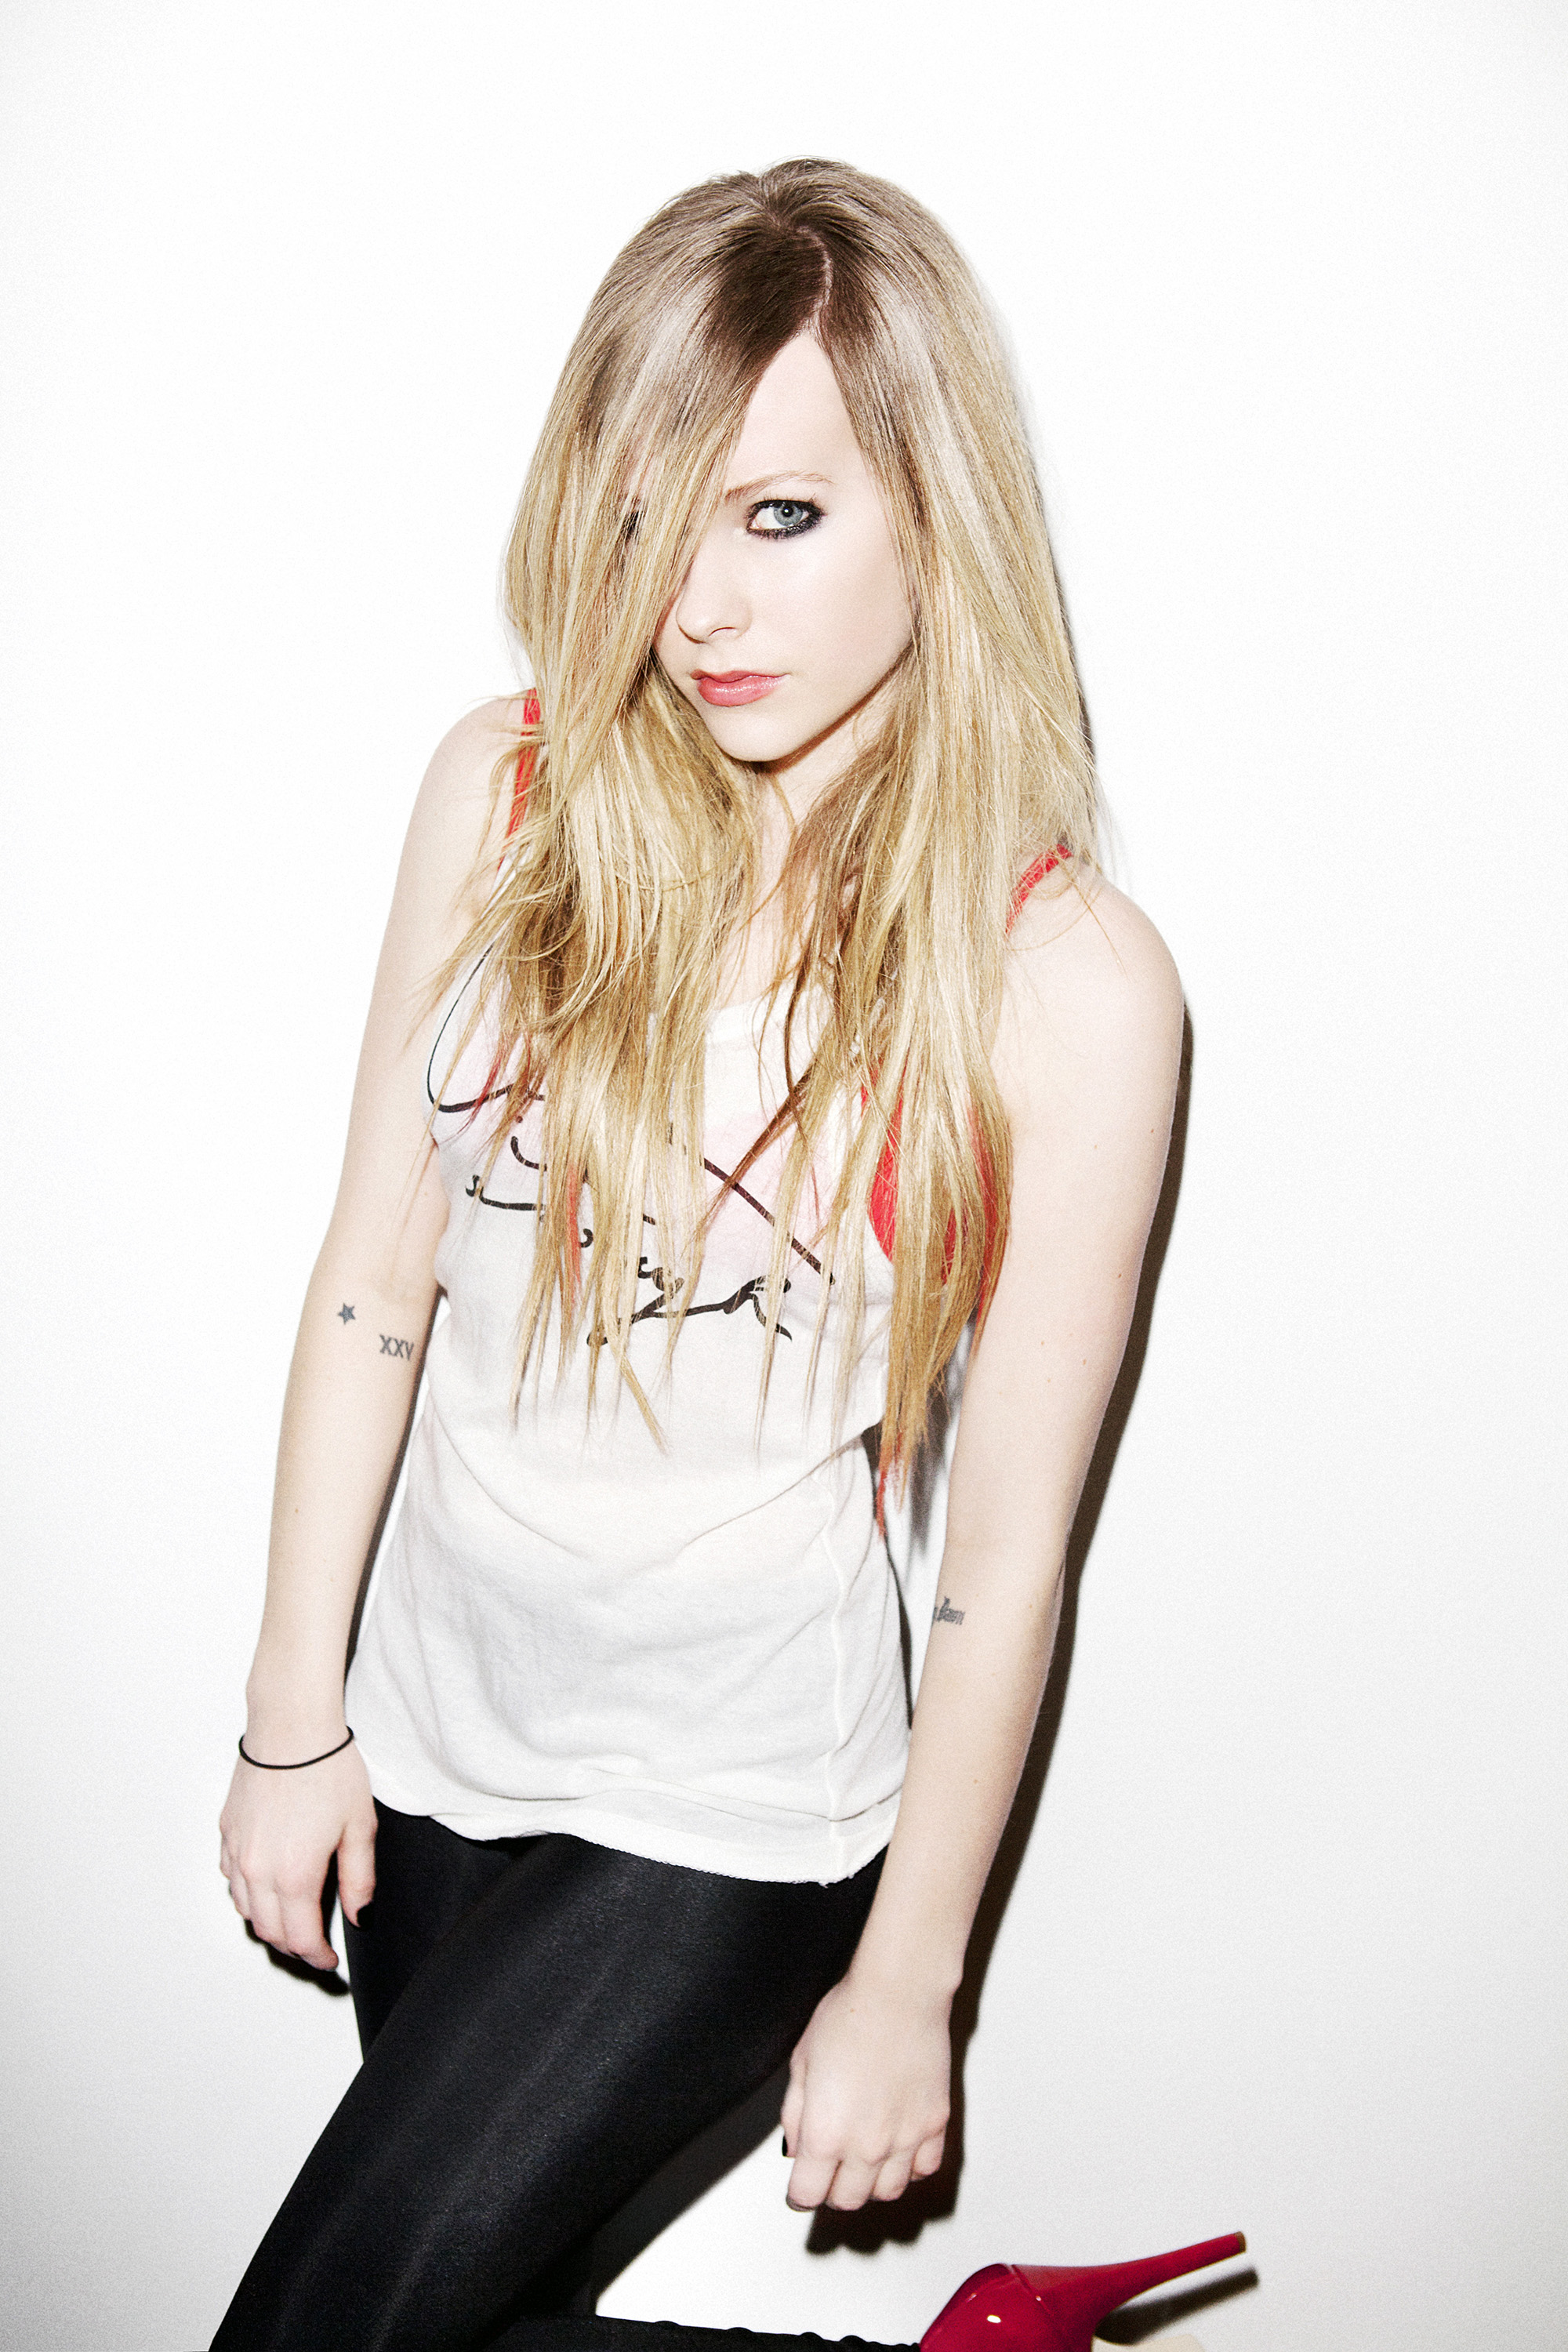 Avril Lavigne photo 822 of 1435 pics, wallpaper - photo #447420 - ThePlace2